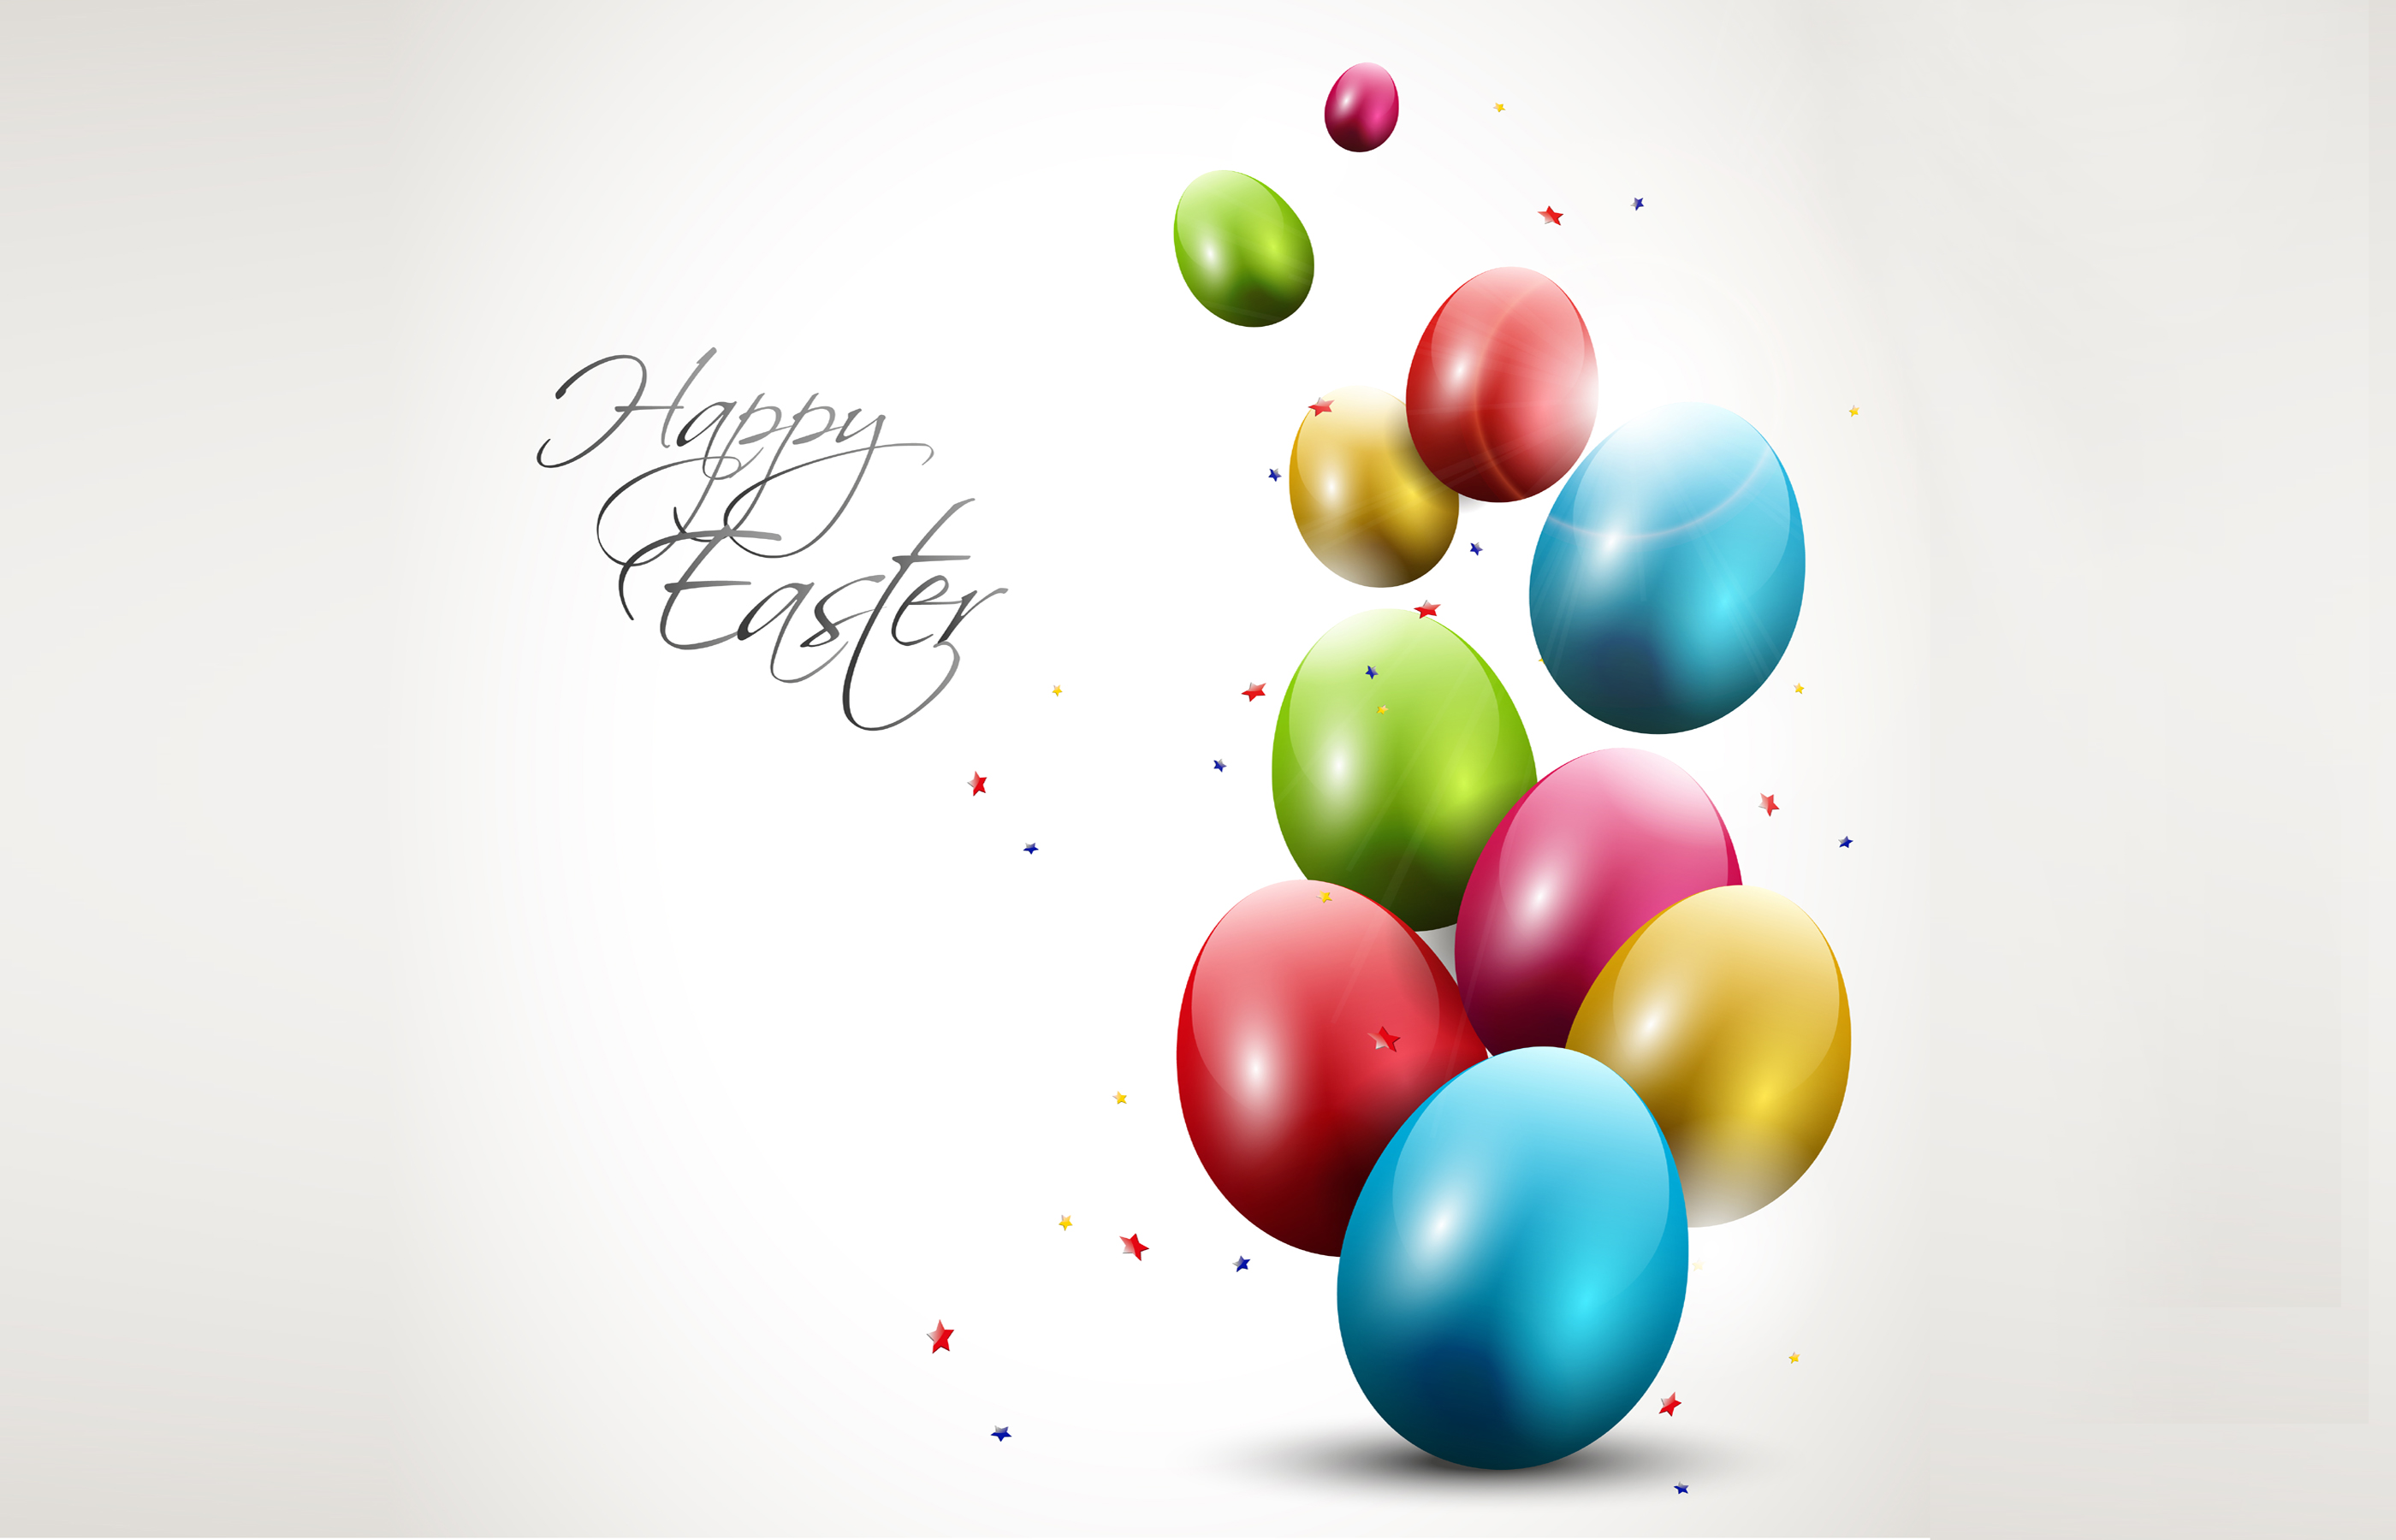 Happy Easter Image For Desktop Wallpaper Background Art